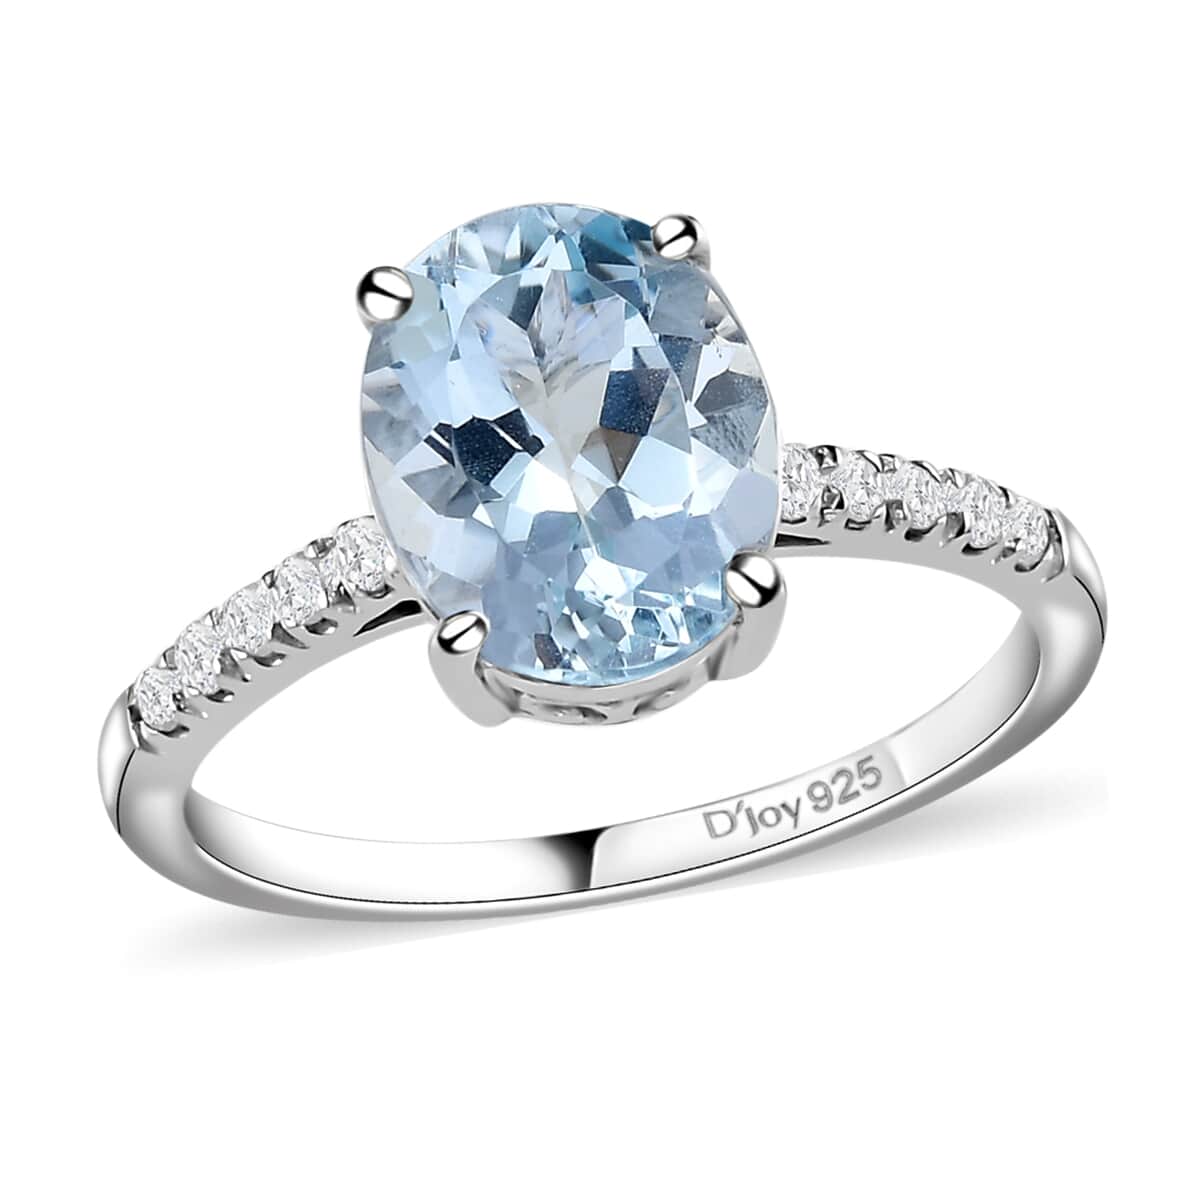 Premium Mangoro Aquamarine, Diamond (0.15 cts) Ring in Platinum Over Sterling Silver (Size 10.0) 2.40 ctw image number 0